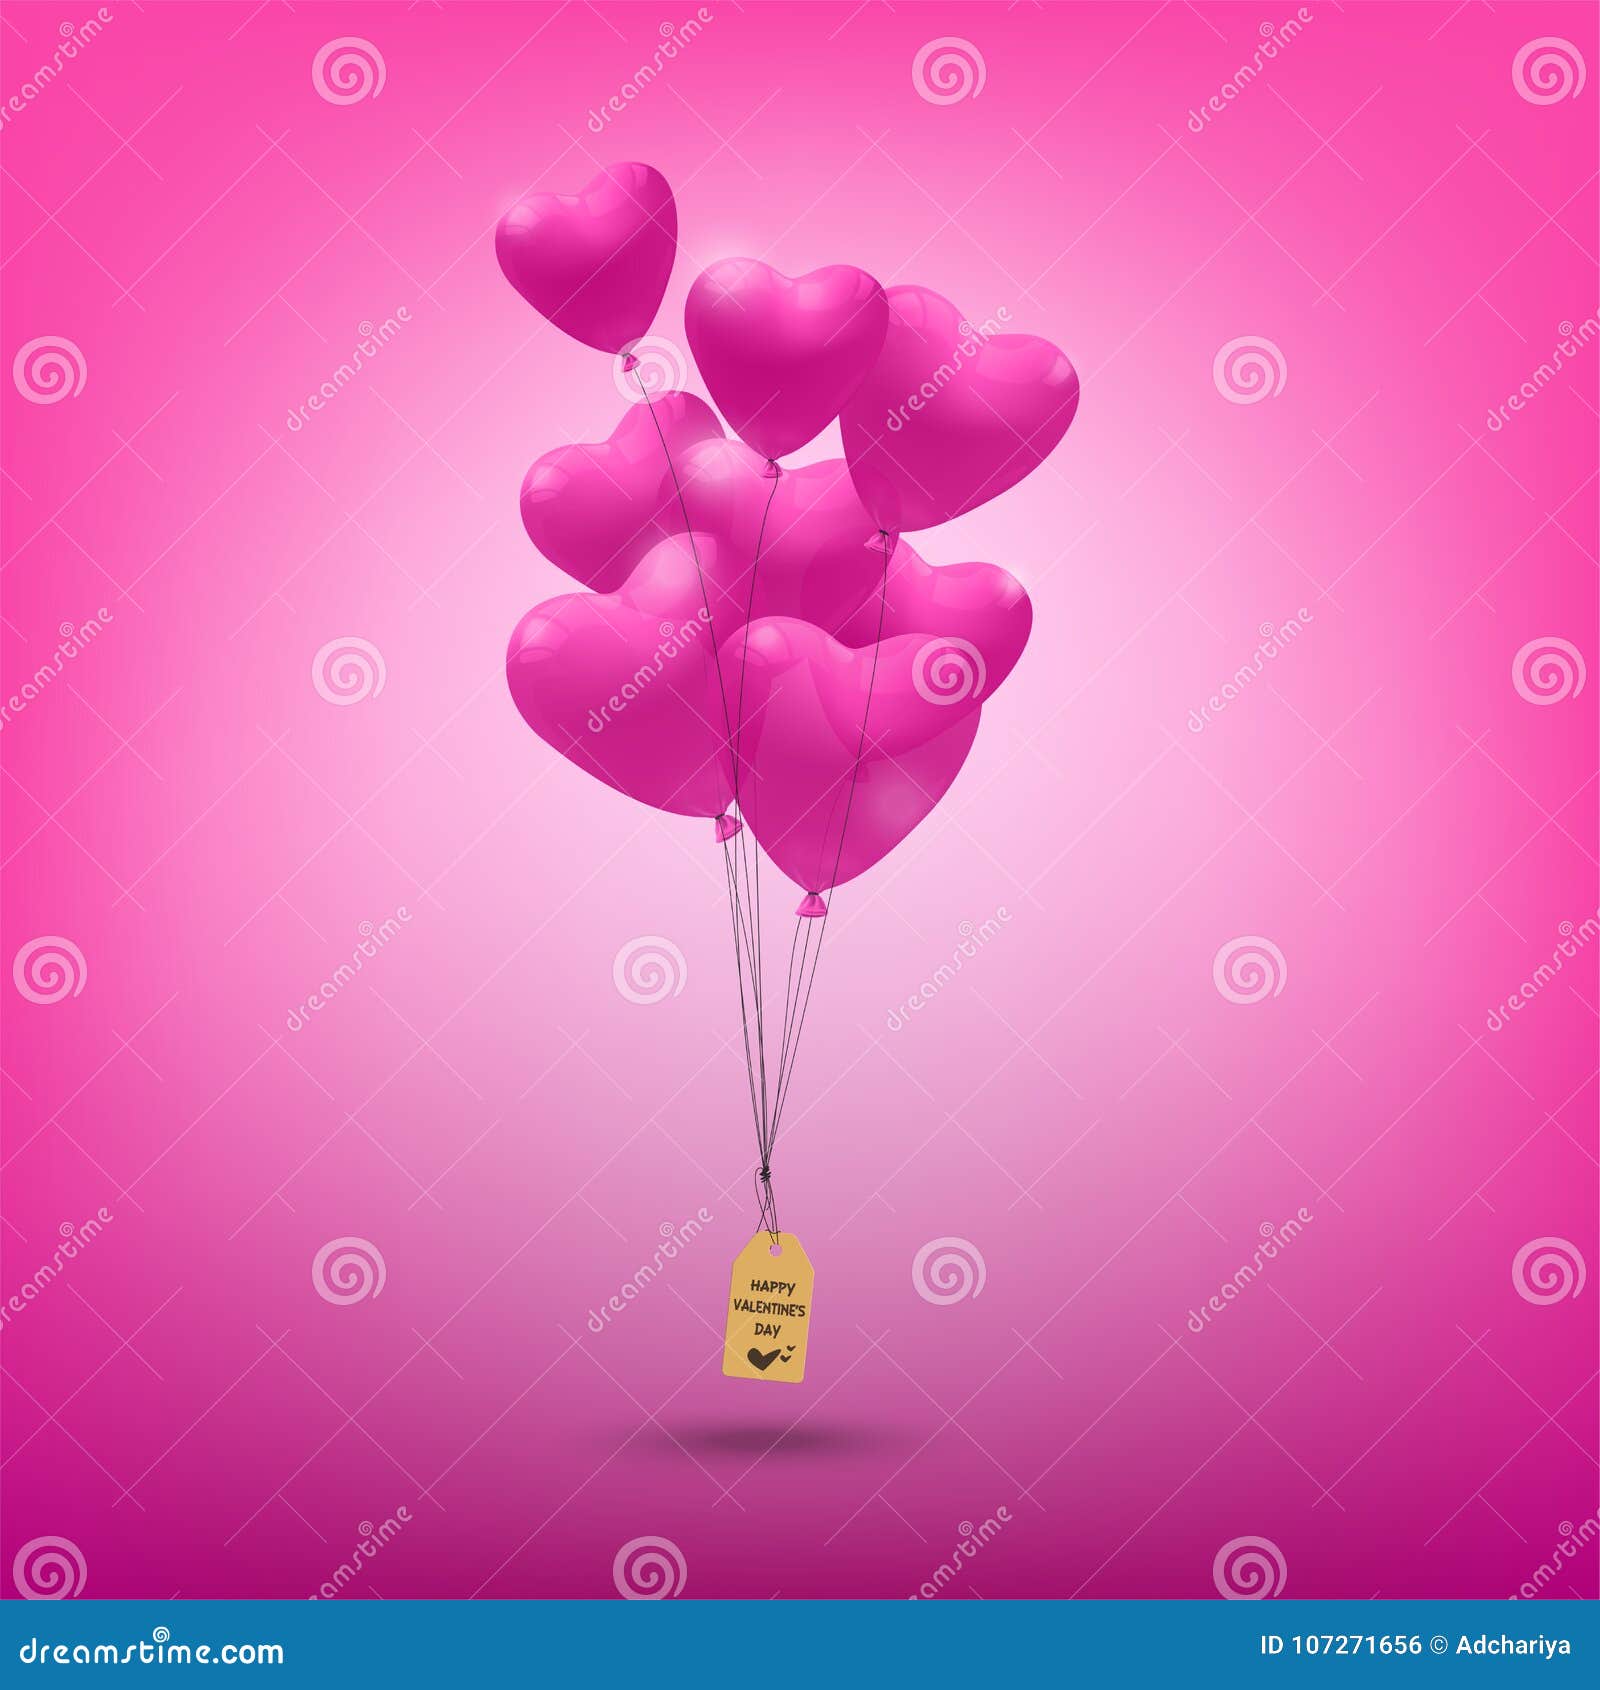 Pink Heart Balloon Group on Pink Background Stock Vector - Illustration of  balloon, bloom: 107271656